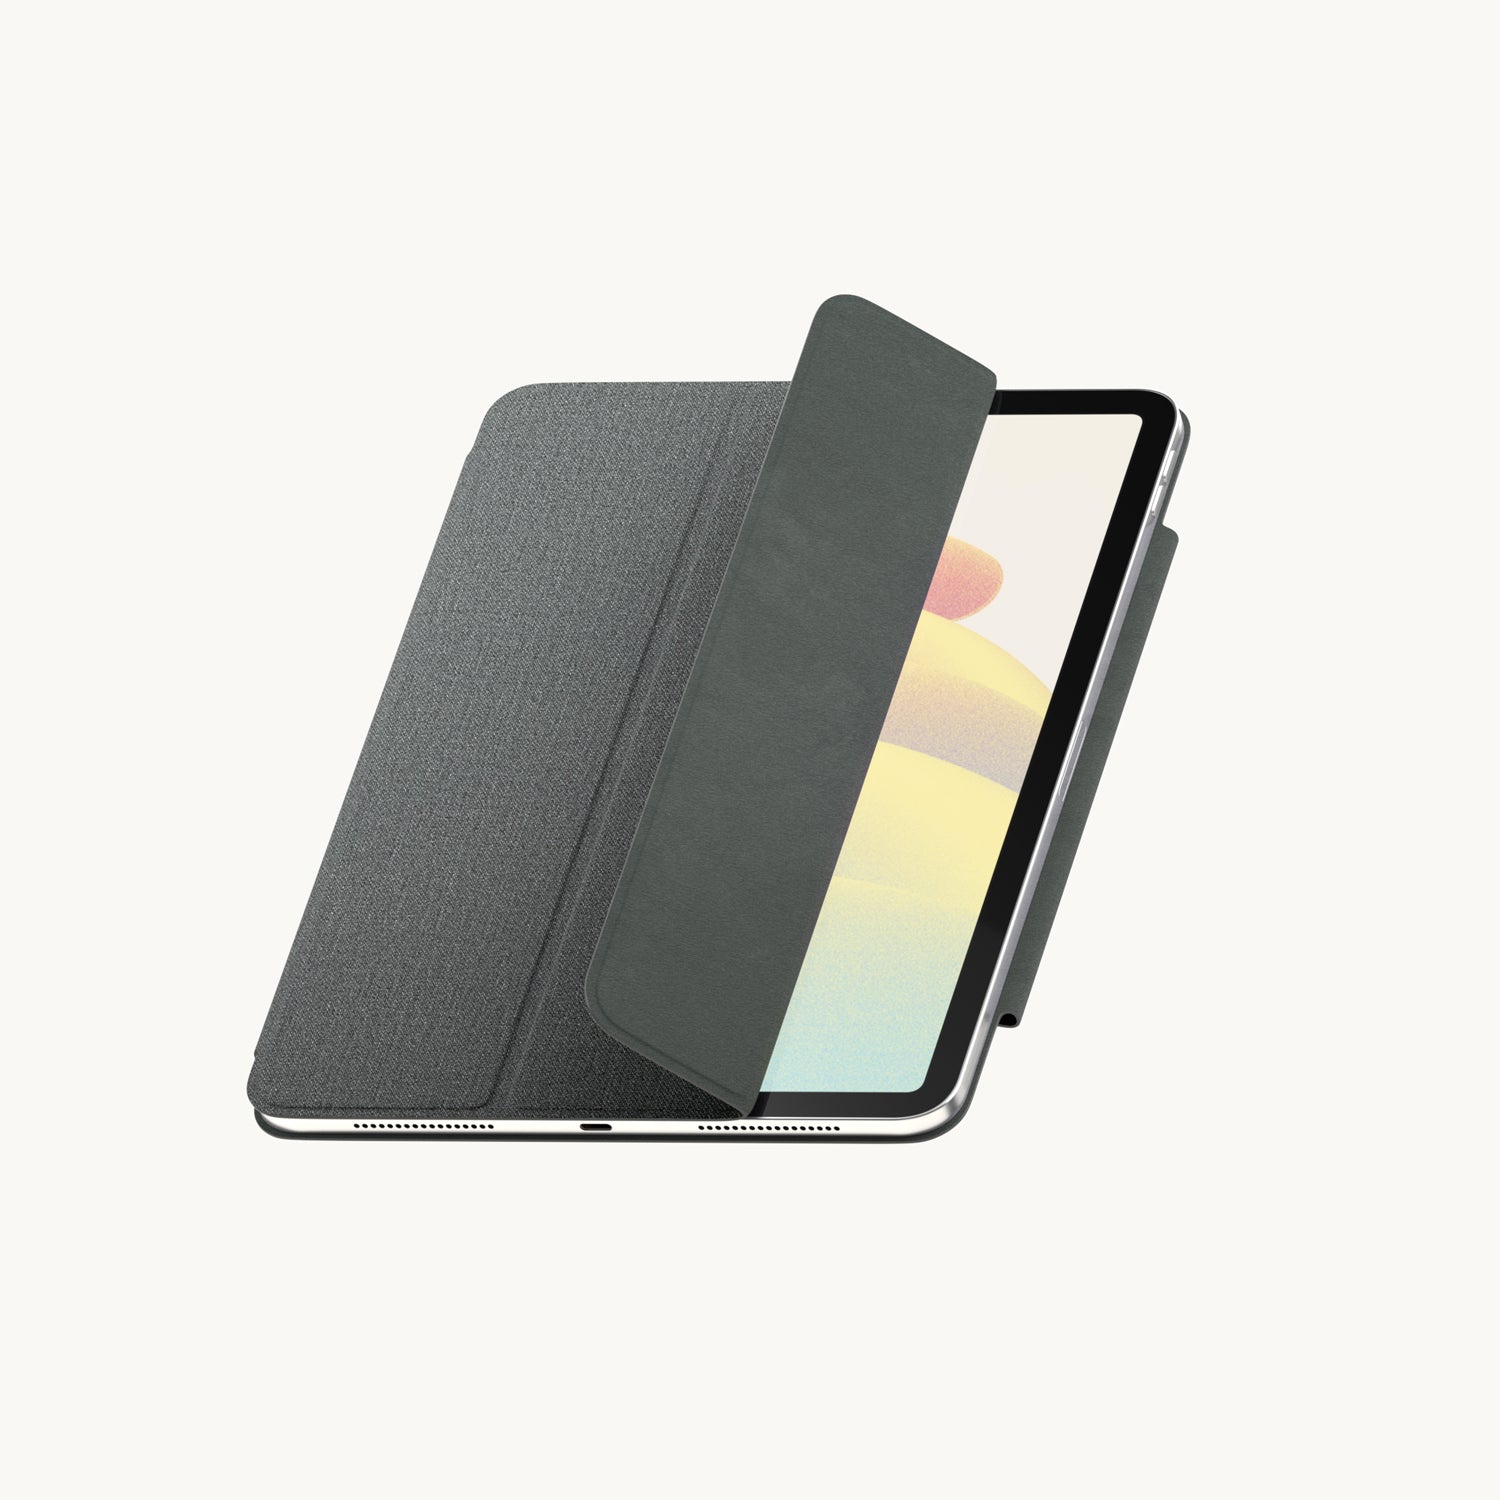 iPad photo with Folio case